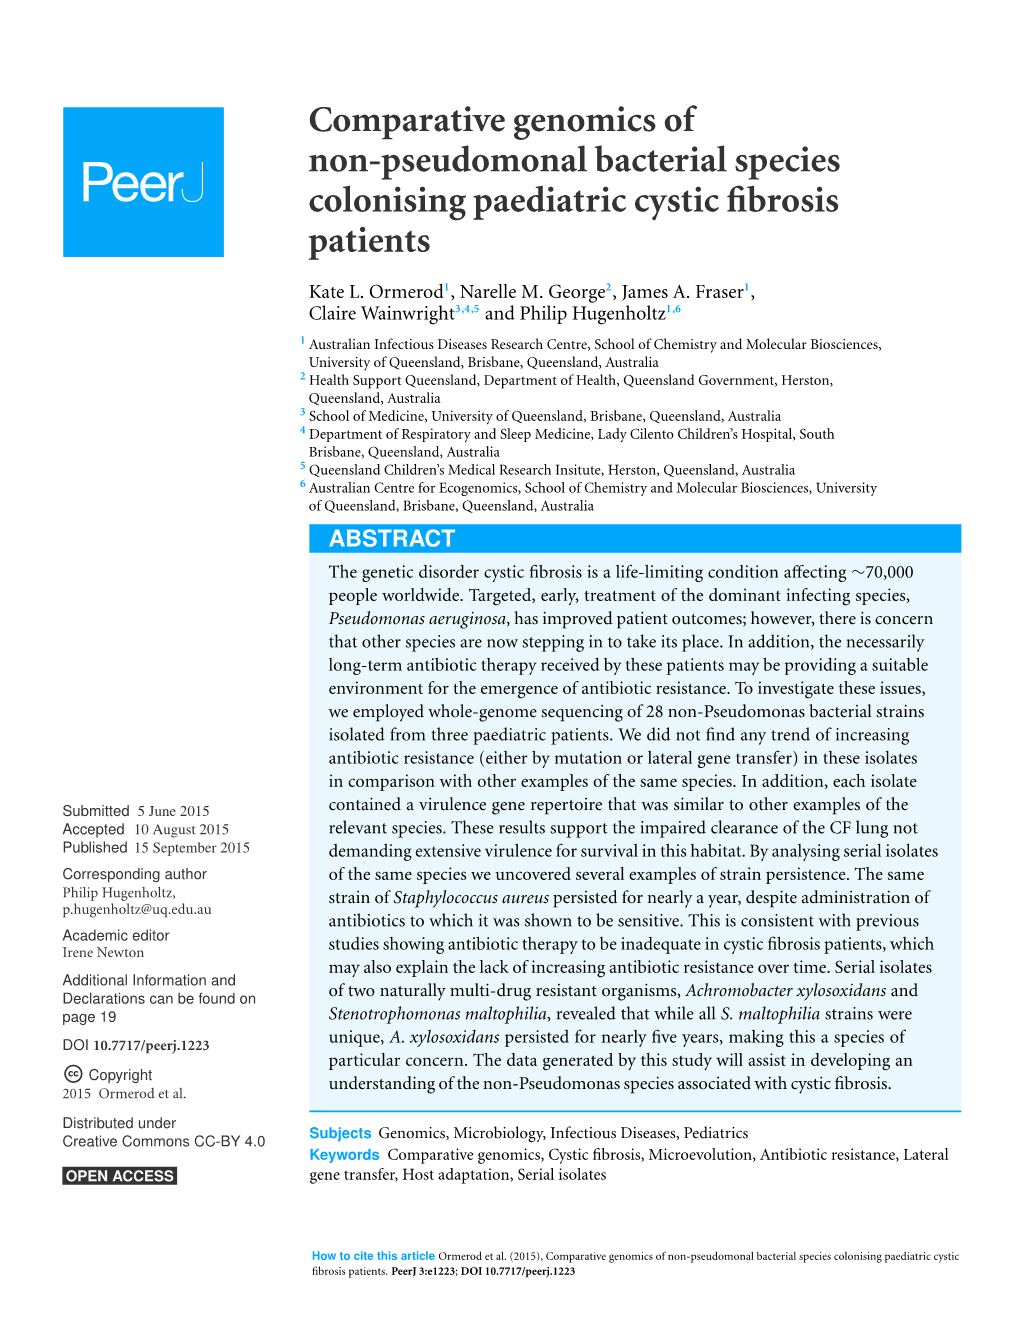 Comparative Genomics of Non-Pseudomonal Bacterial Species Colonising Paediatric Cystic Fibrosis Patients